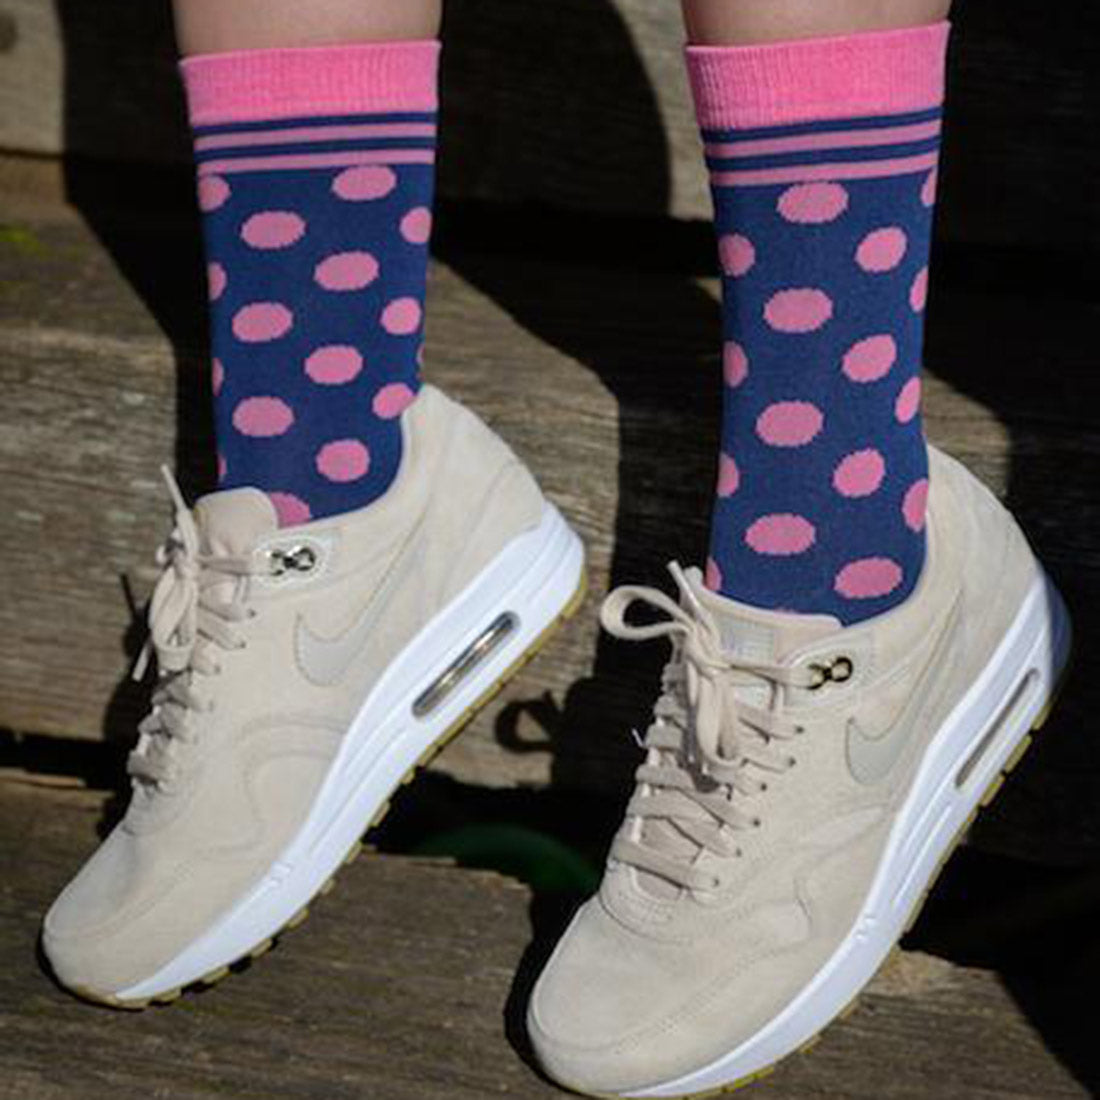 socks-navy-and-pink-polka-dot-bamboo-socks-2.jpg